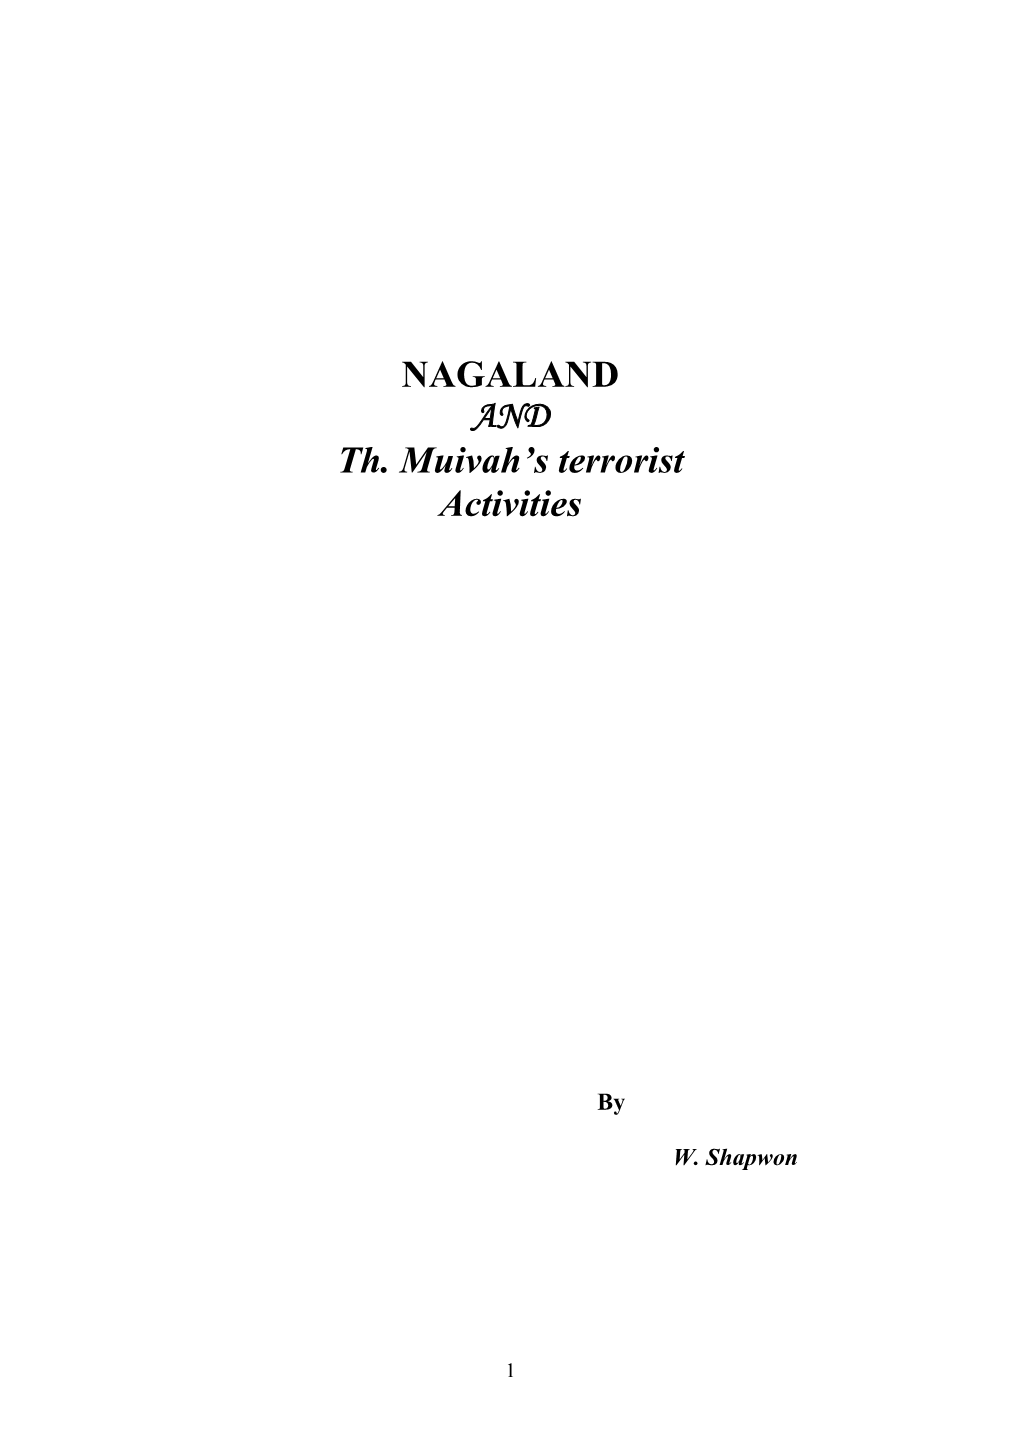 NAGALAND and Th. Muivah's Terrorist Activities